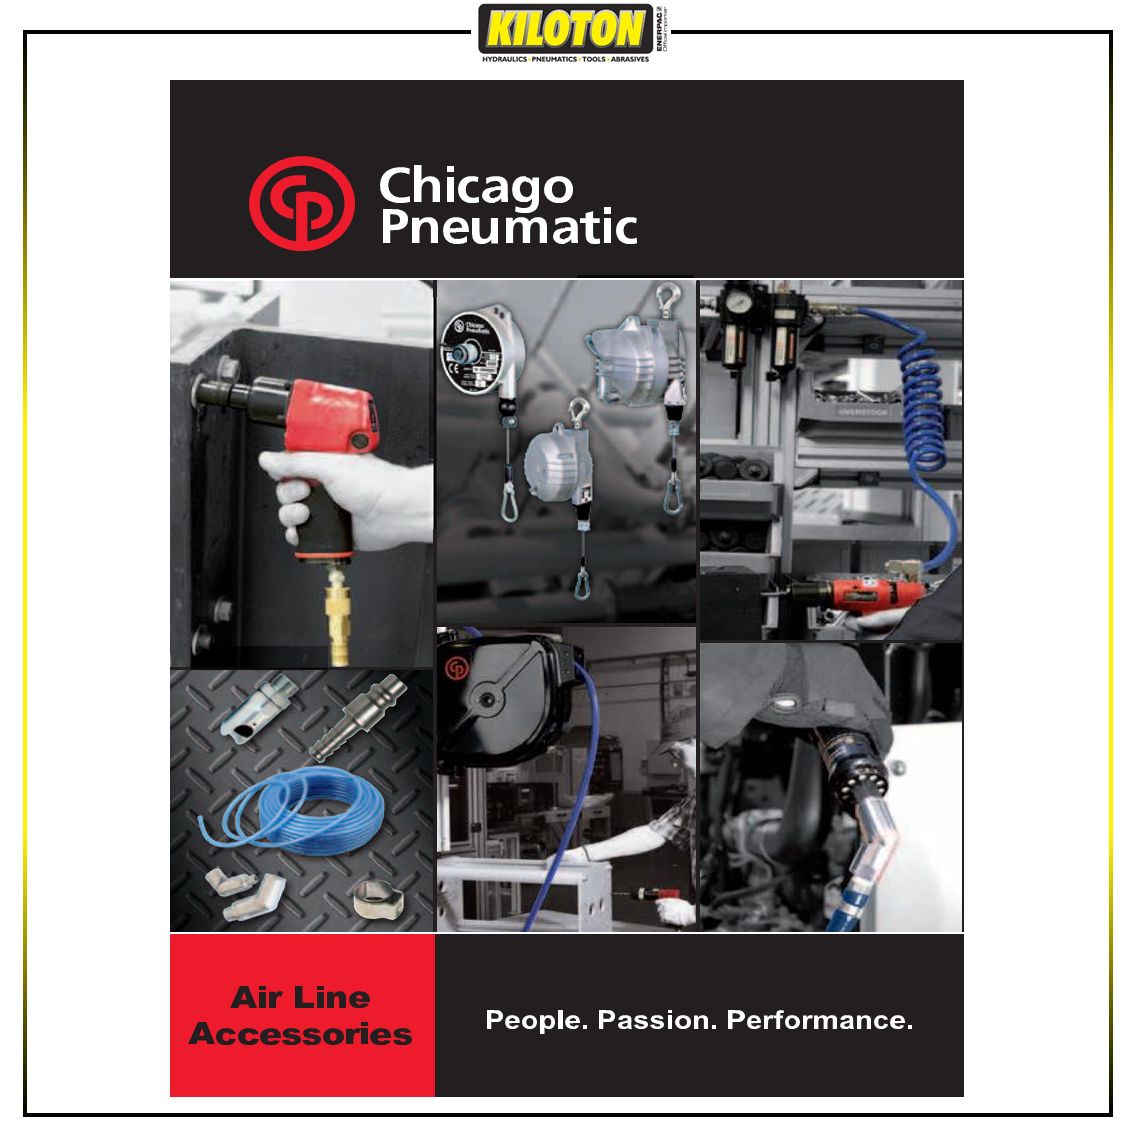 KILATON - Chicago Pneumatic Accessories Catalogue